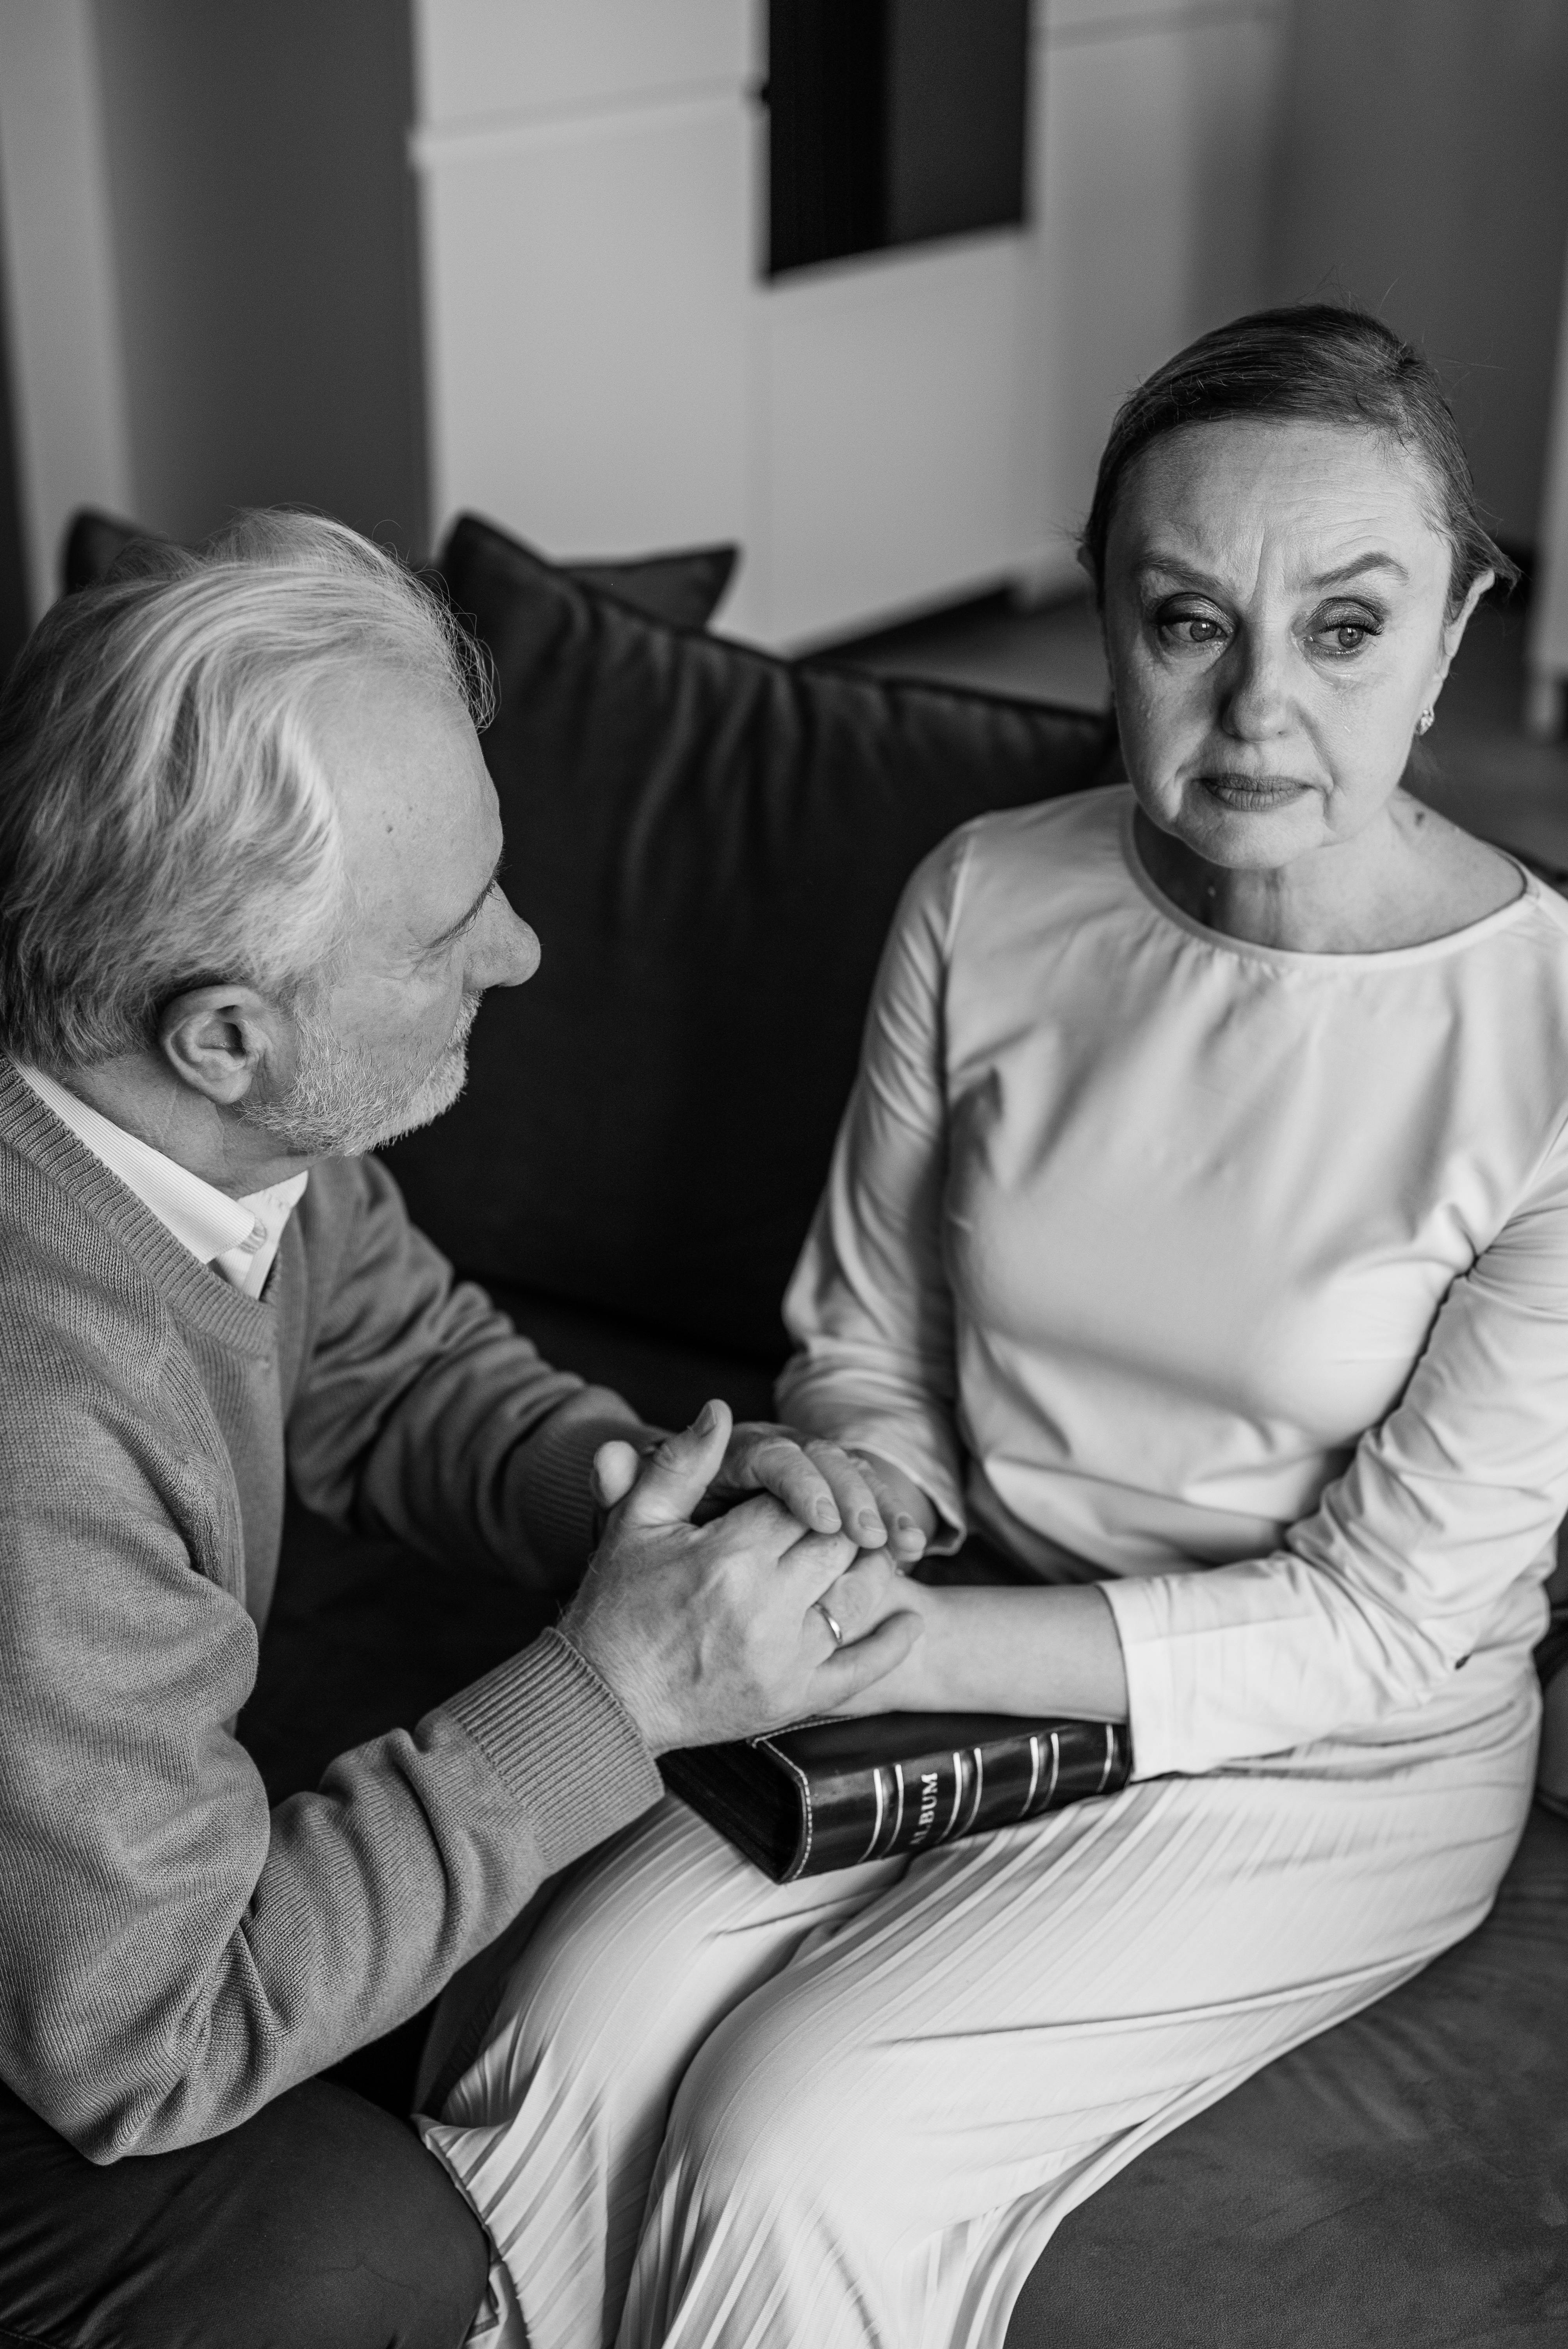 An upset senior couple holding hands | Source: Pexels